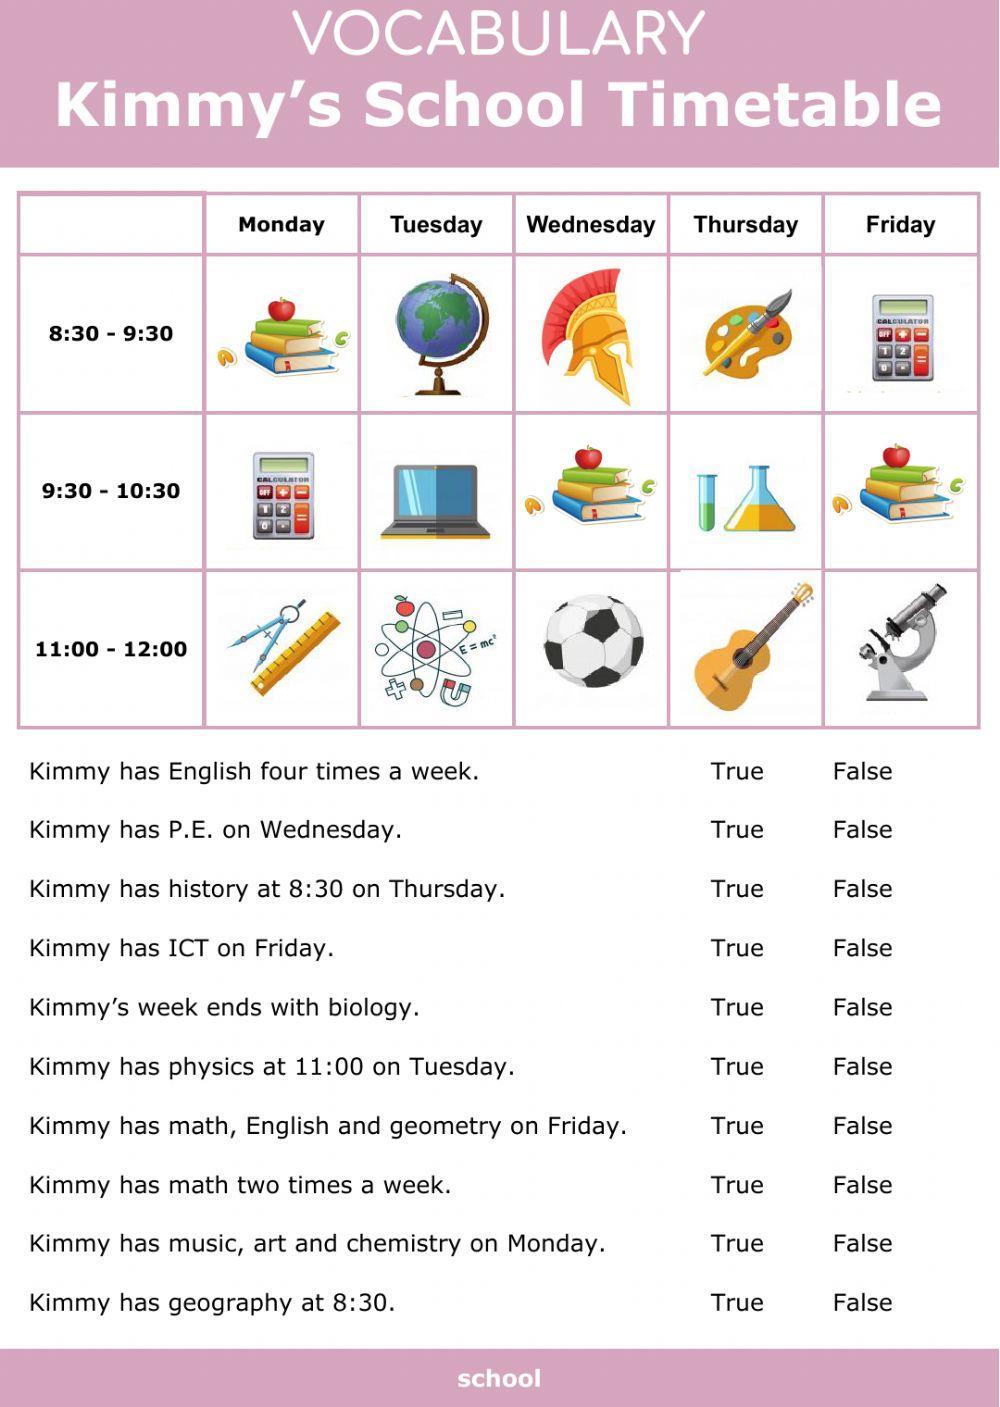 Kimmy's school timetable